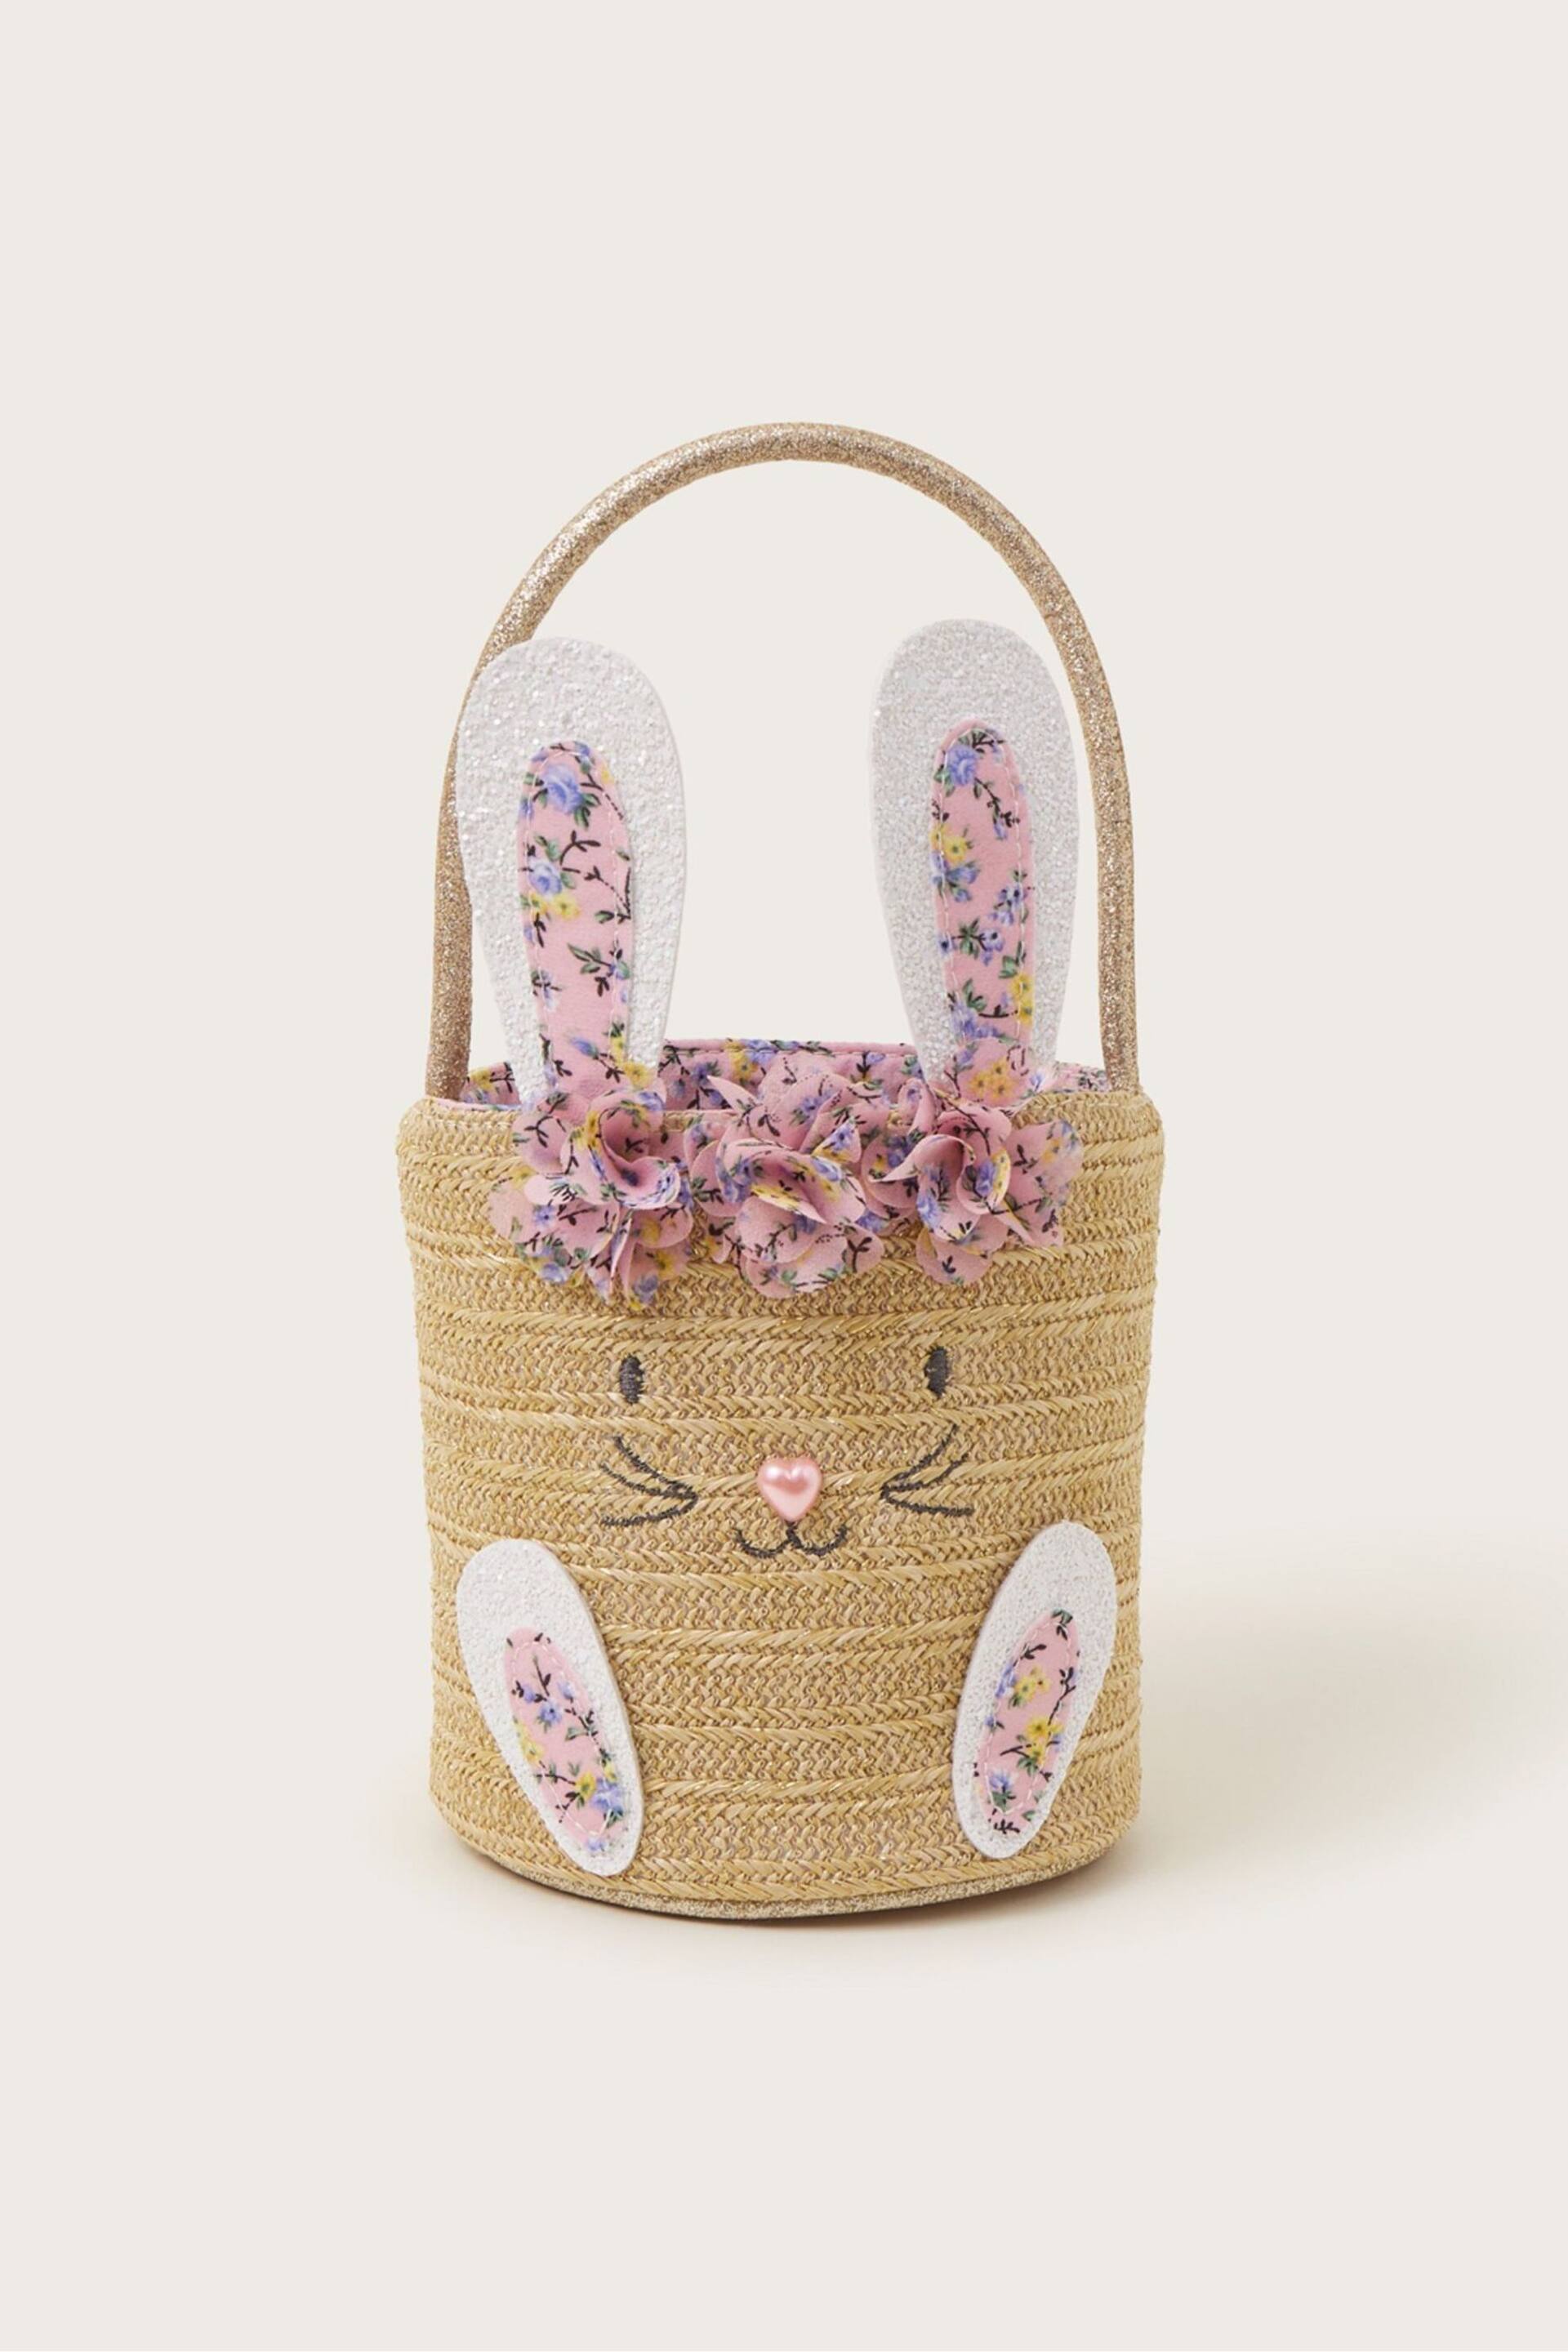 Monsoon Natural Easter Bunny Basket - Image 1 of 3